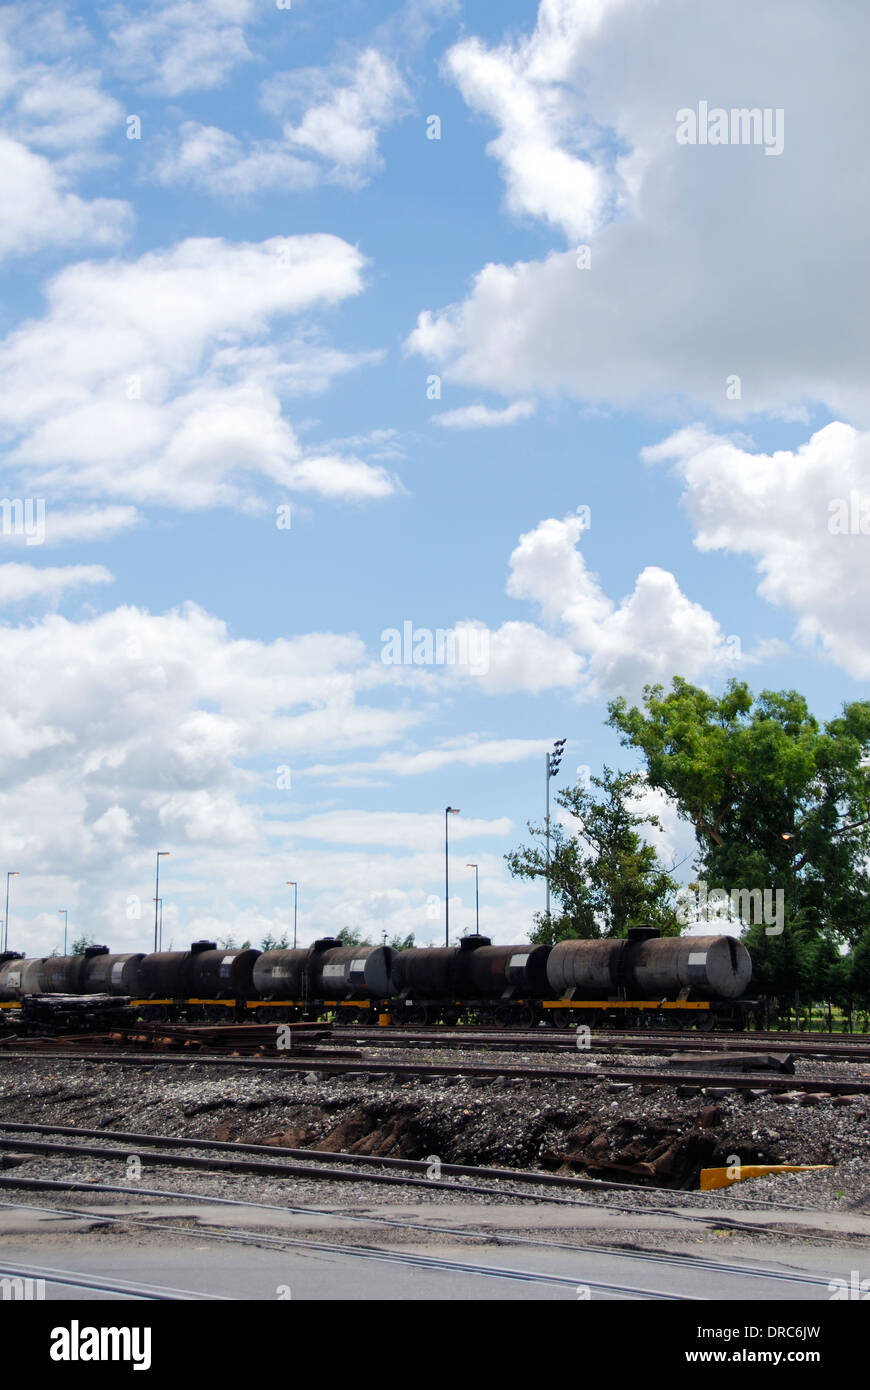 Rail cars Stock Photo